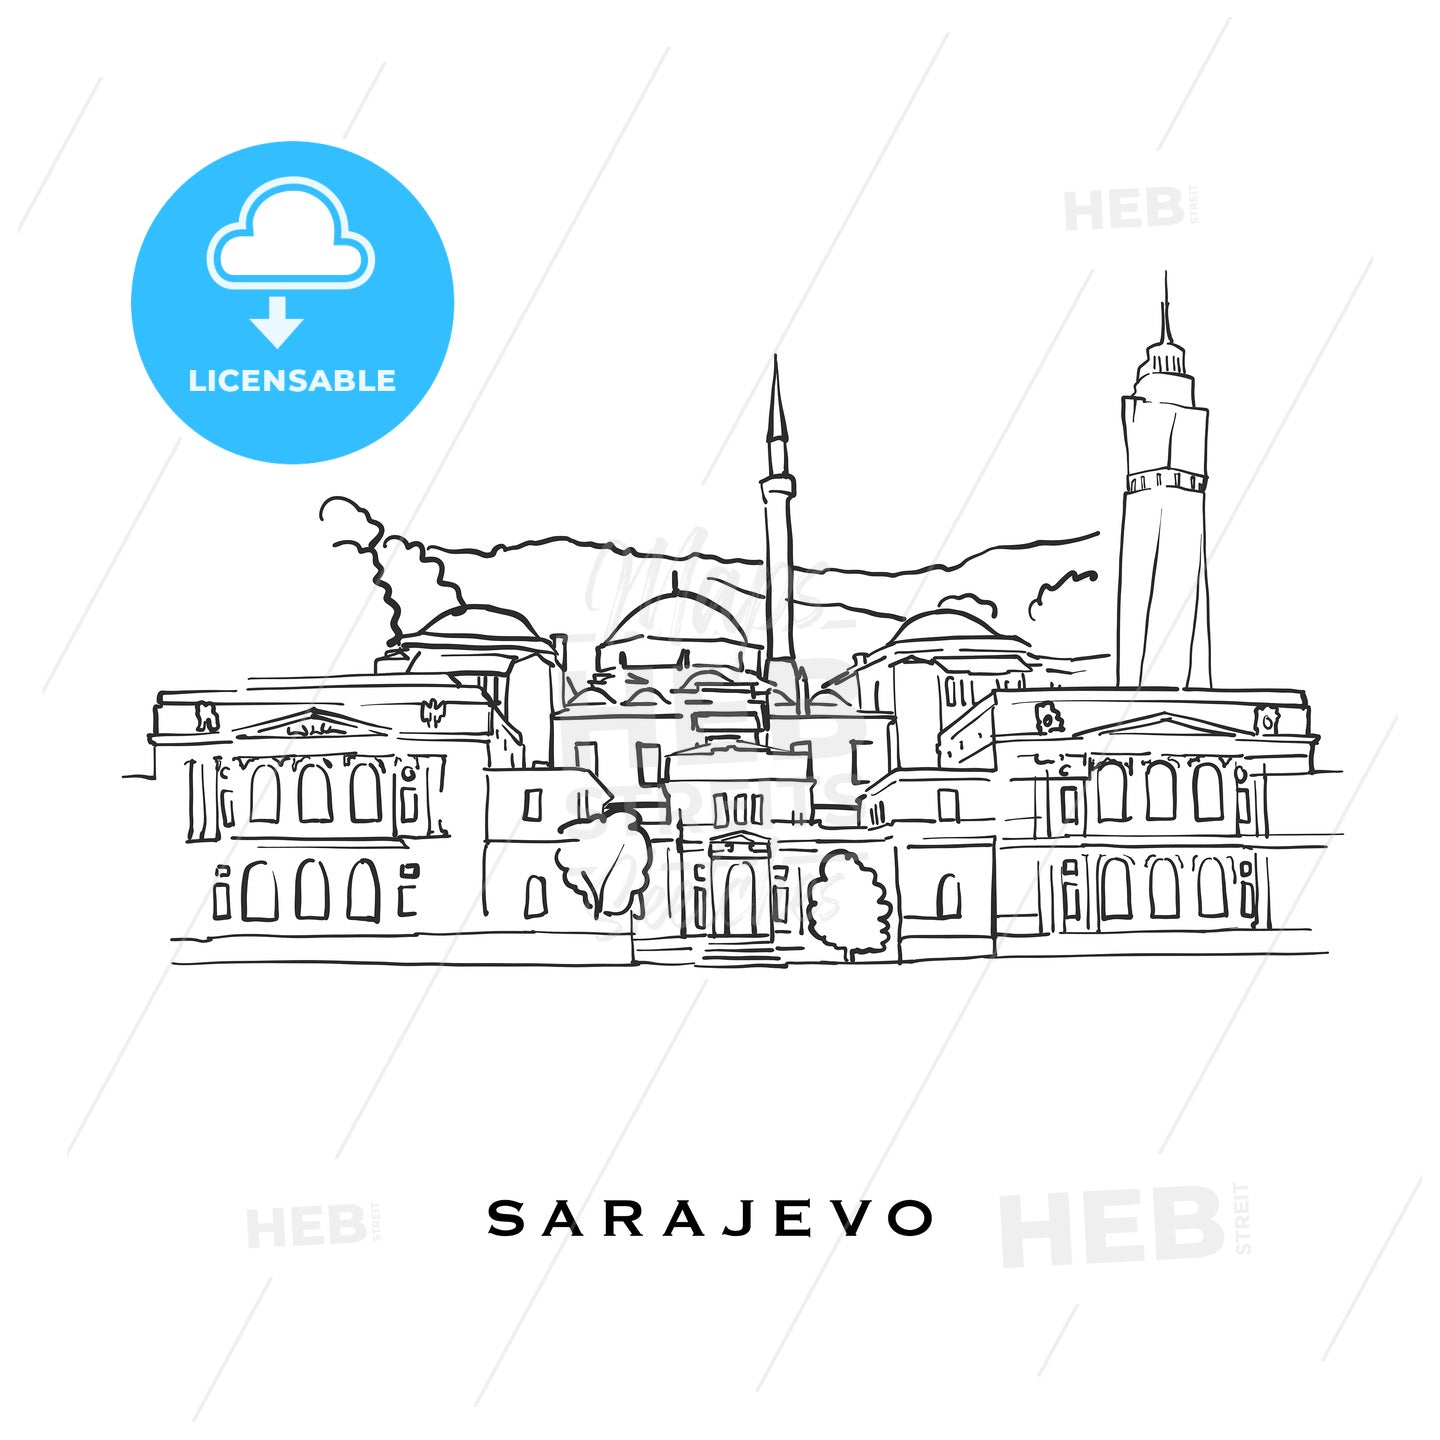 Sarajevo Bosnia and Herzegovina famous architecture – instant download